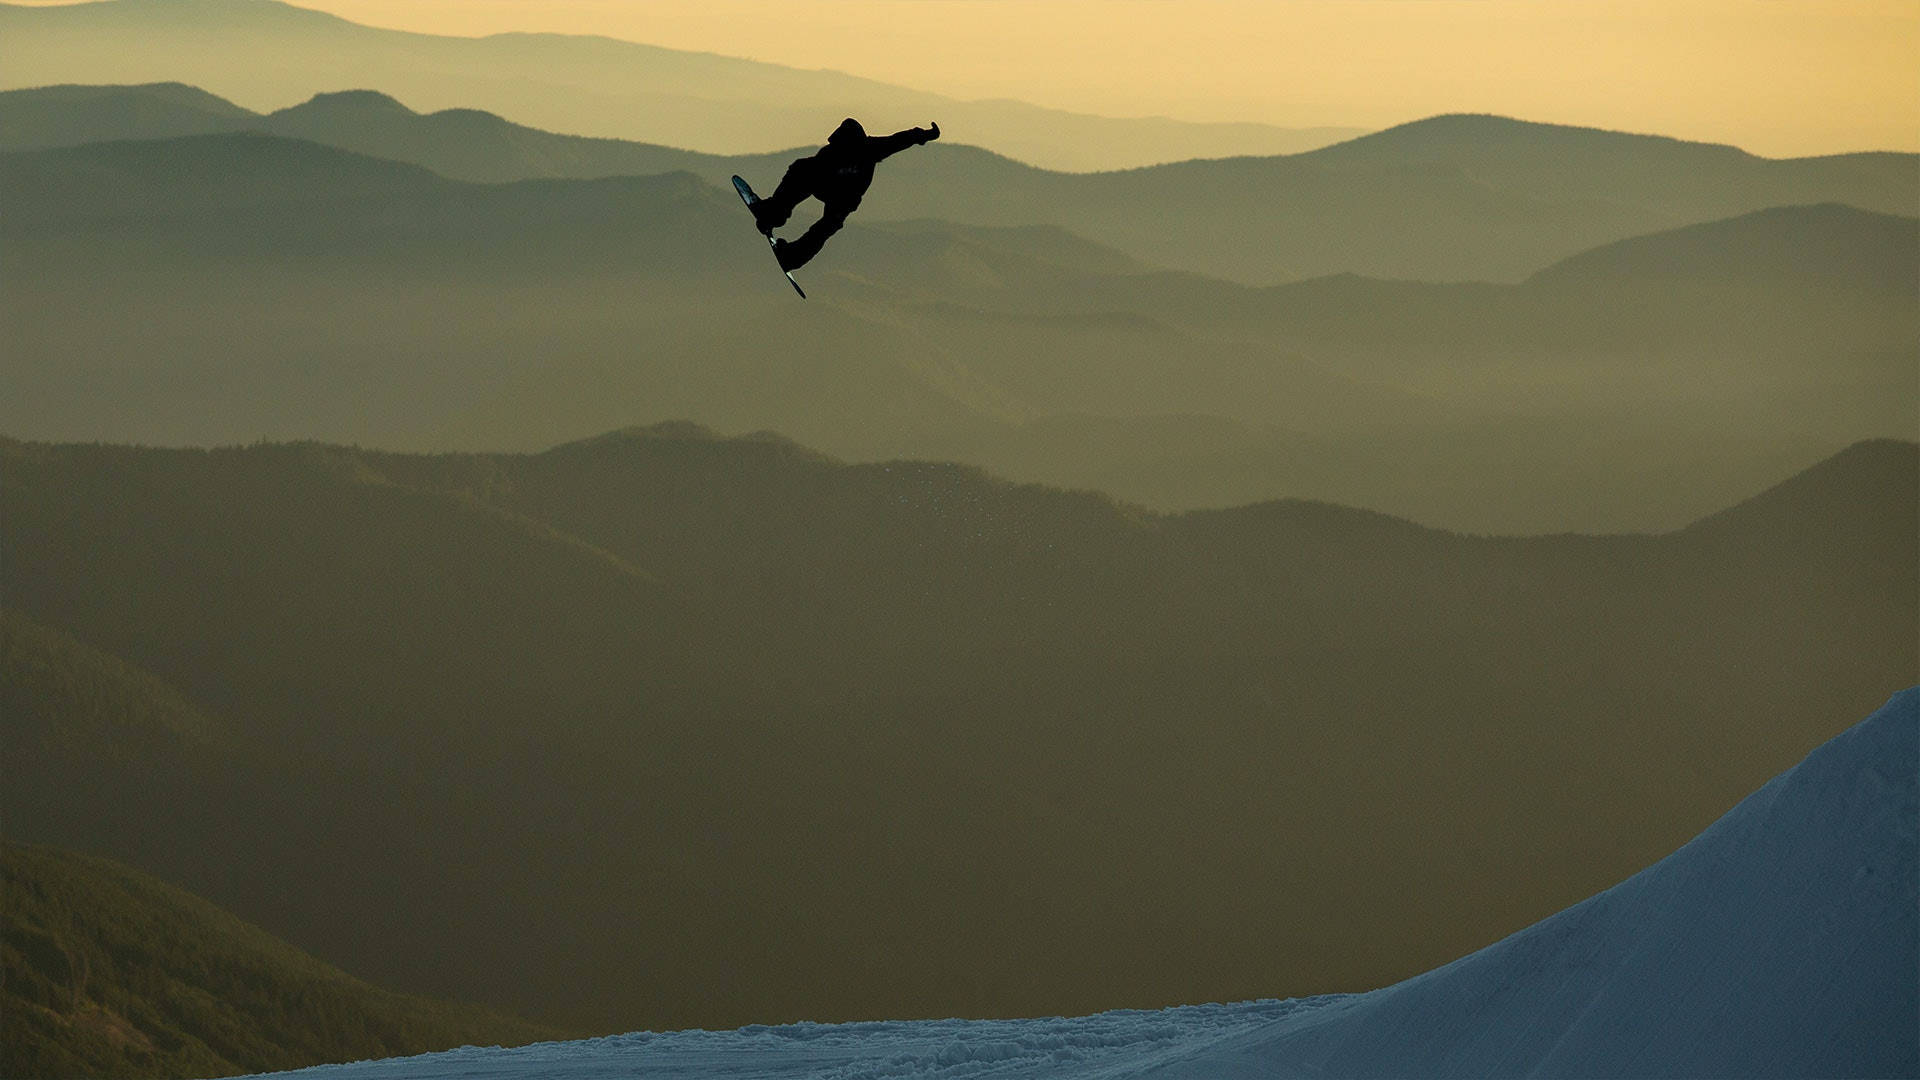 Snowboarding On Horizon Background